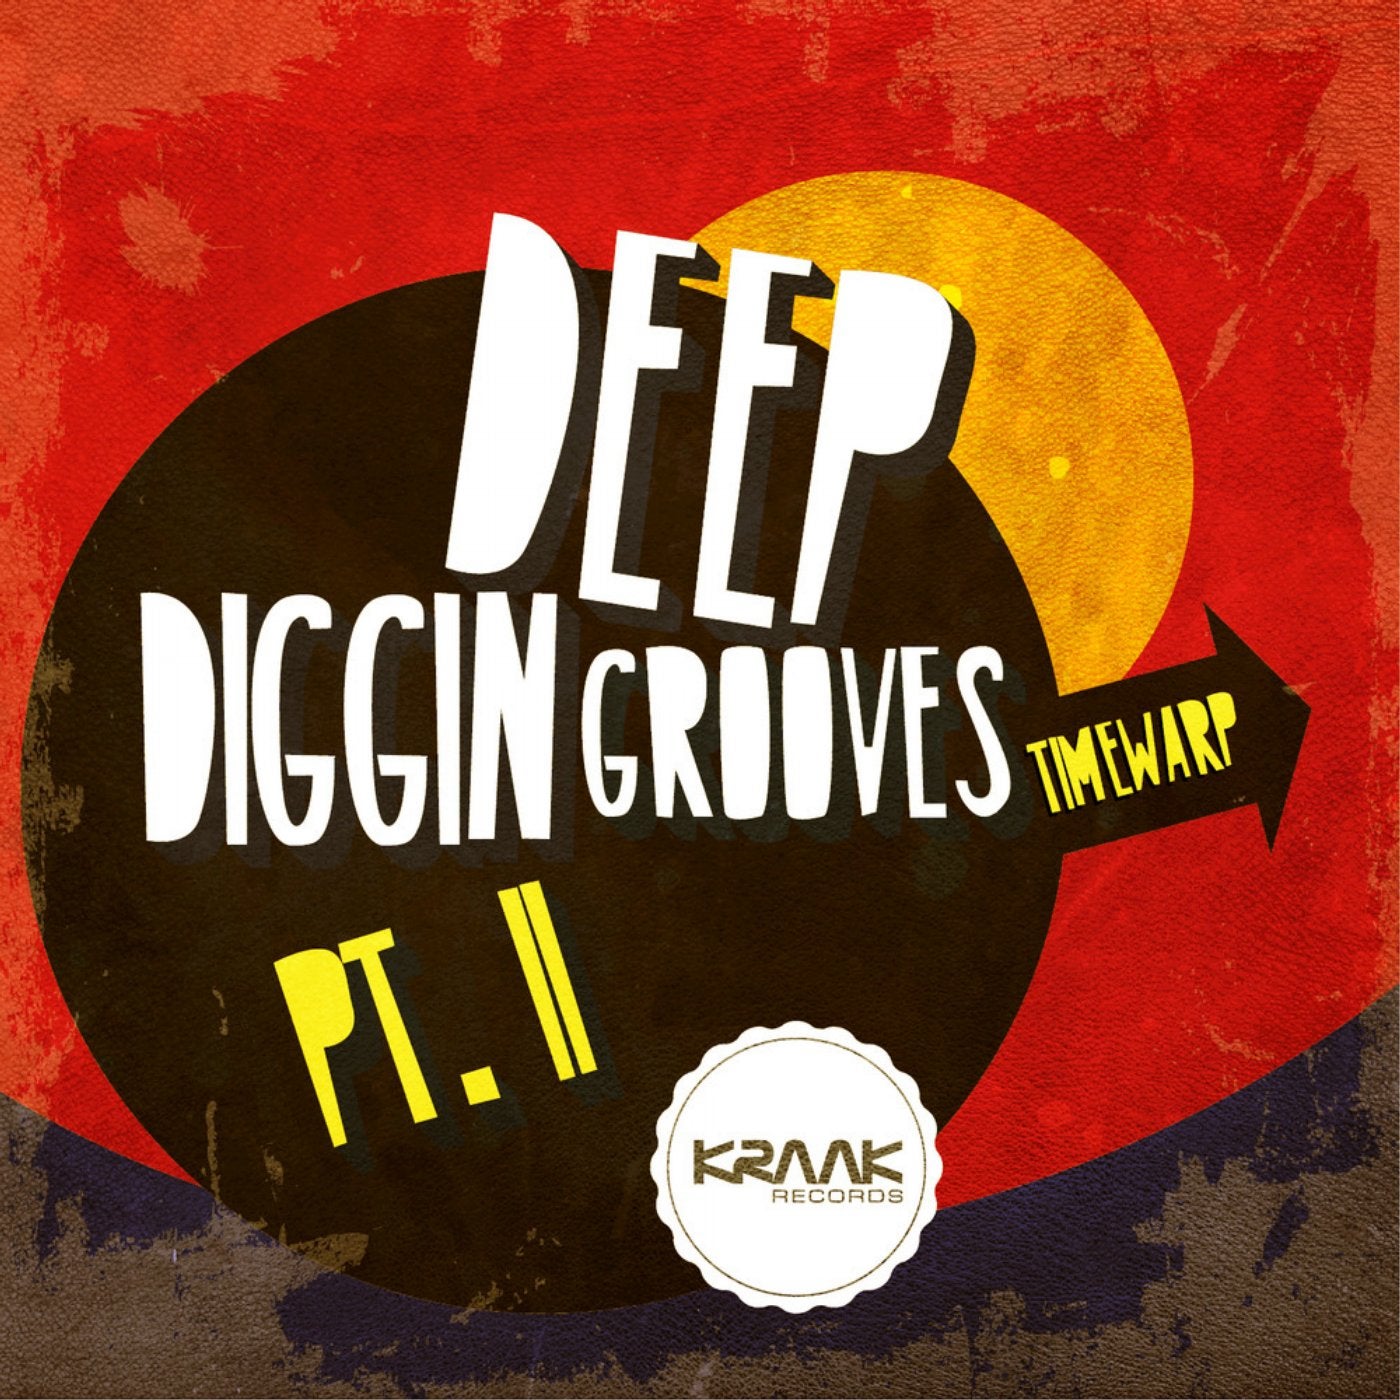 Deep Diggin Grooves, Pt. II